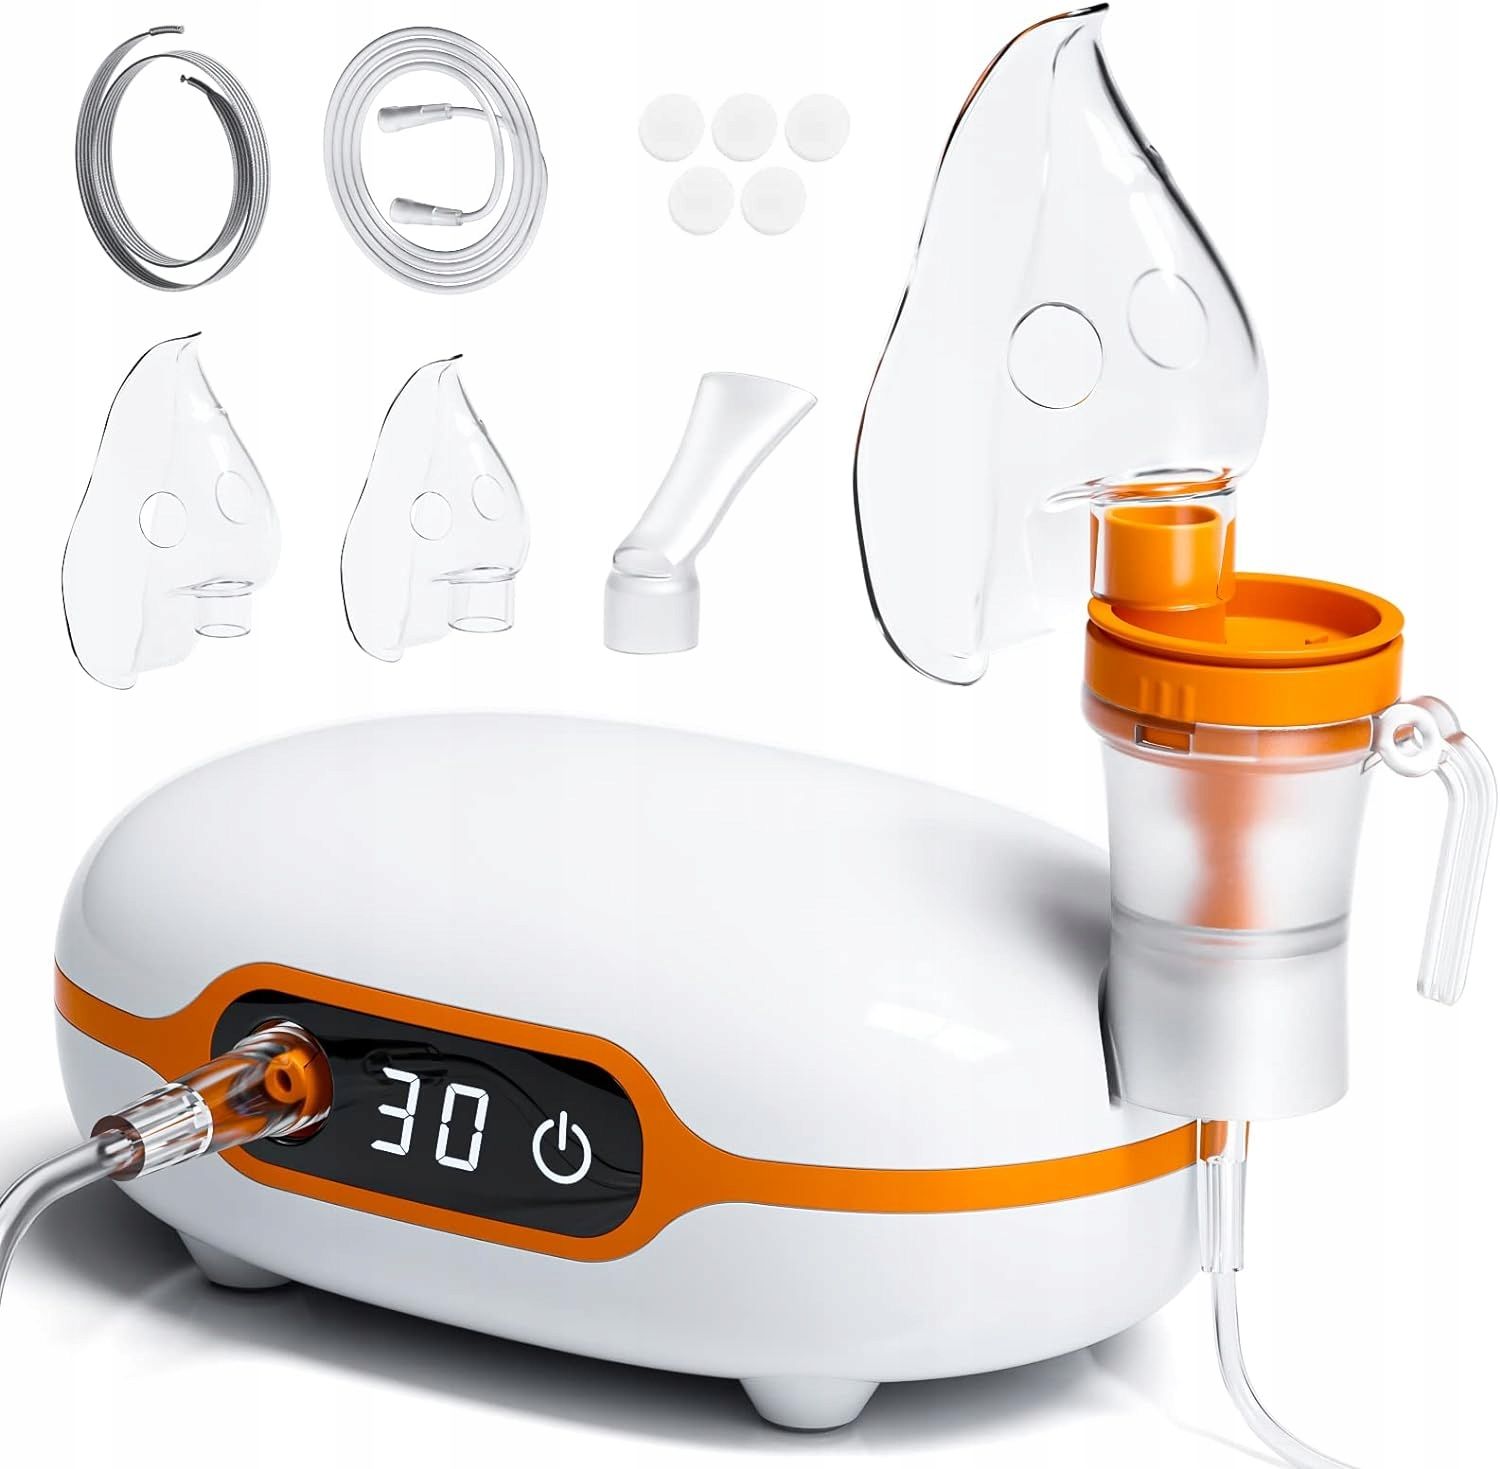 Inhalator nebulizator kompresorowy Regulowany 0.2ml/min 40-80 Kpa